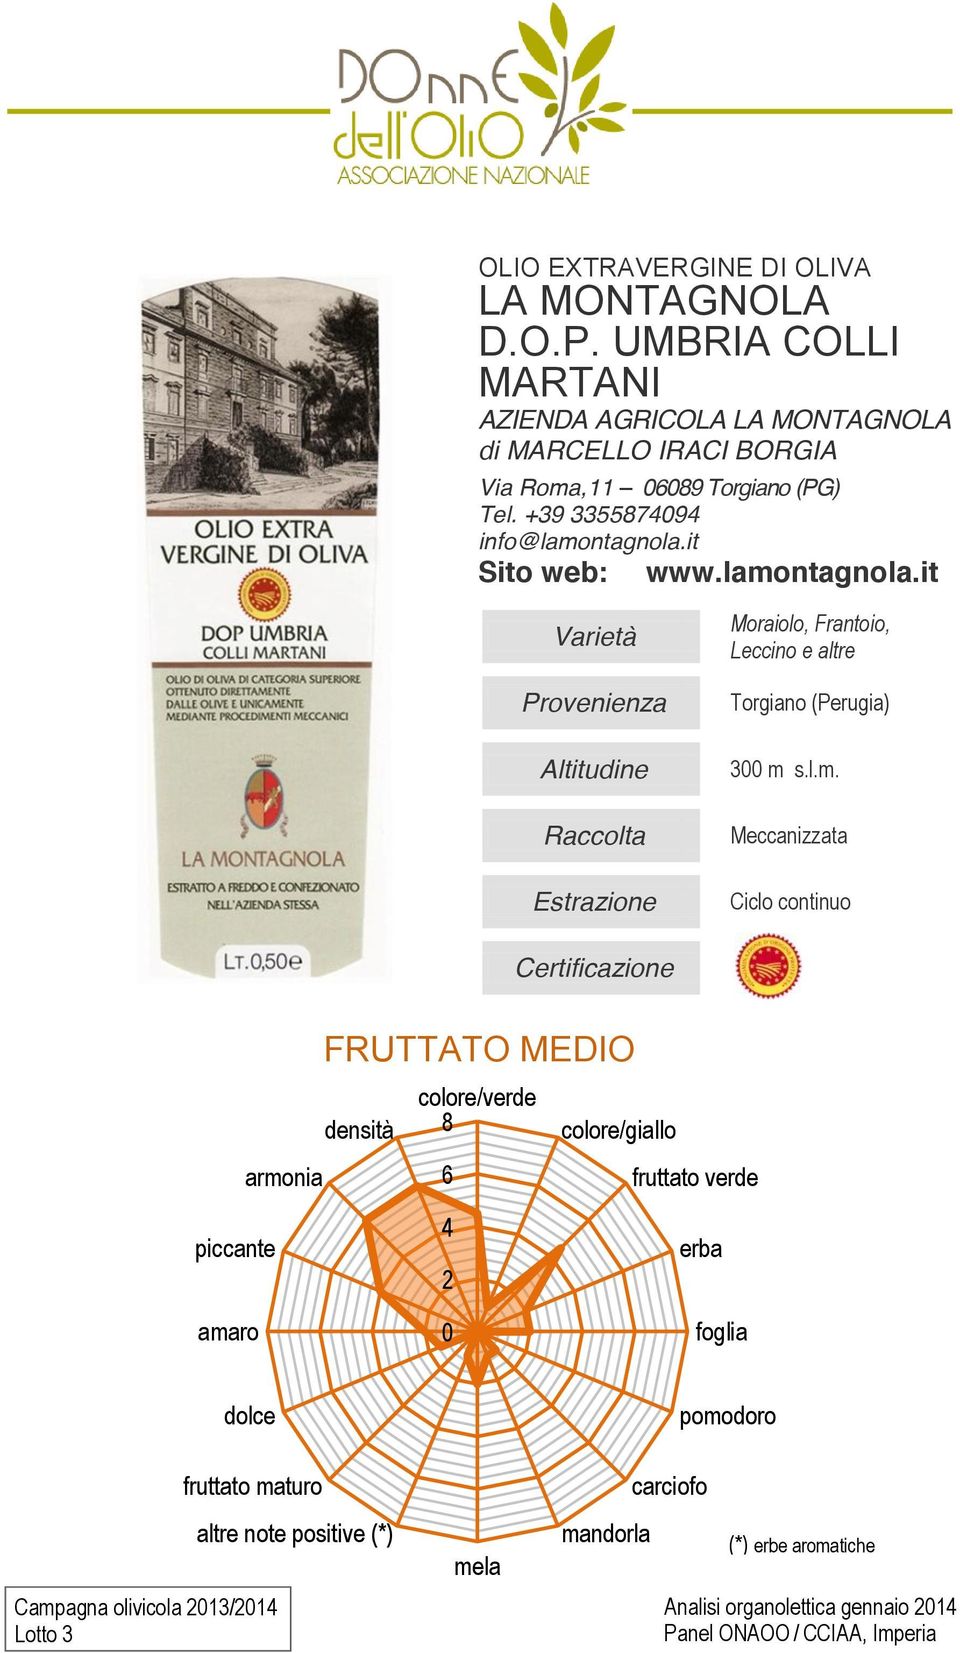 Torgiano (PG) Tel. +39 335579 info@lamontagnola.